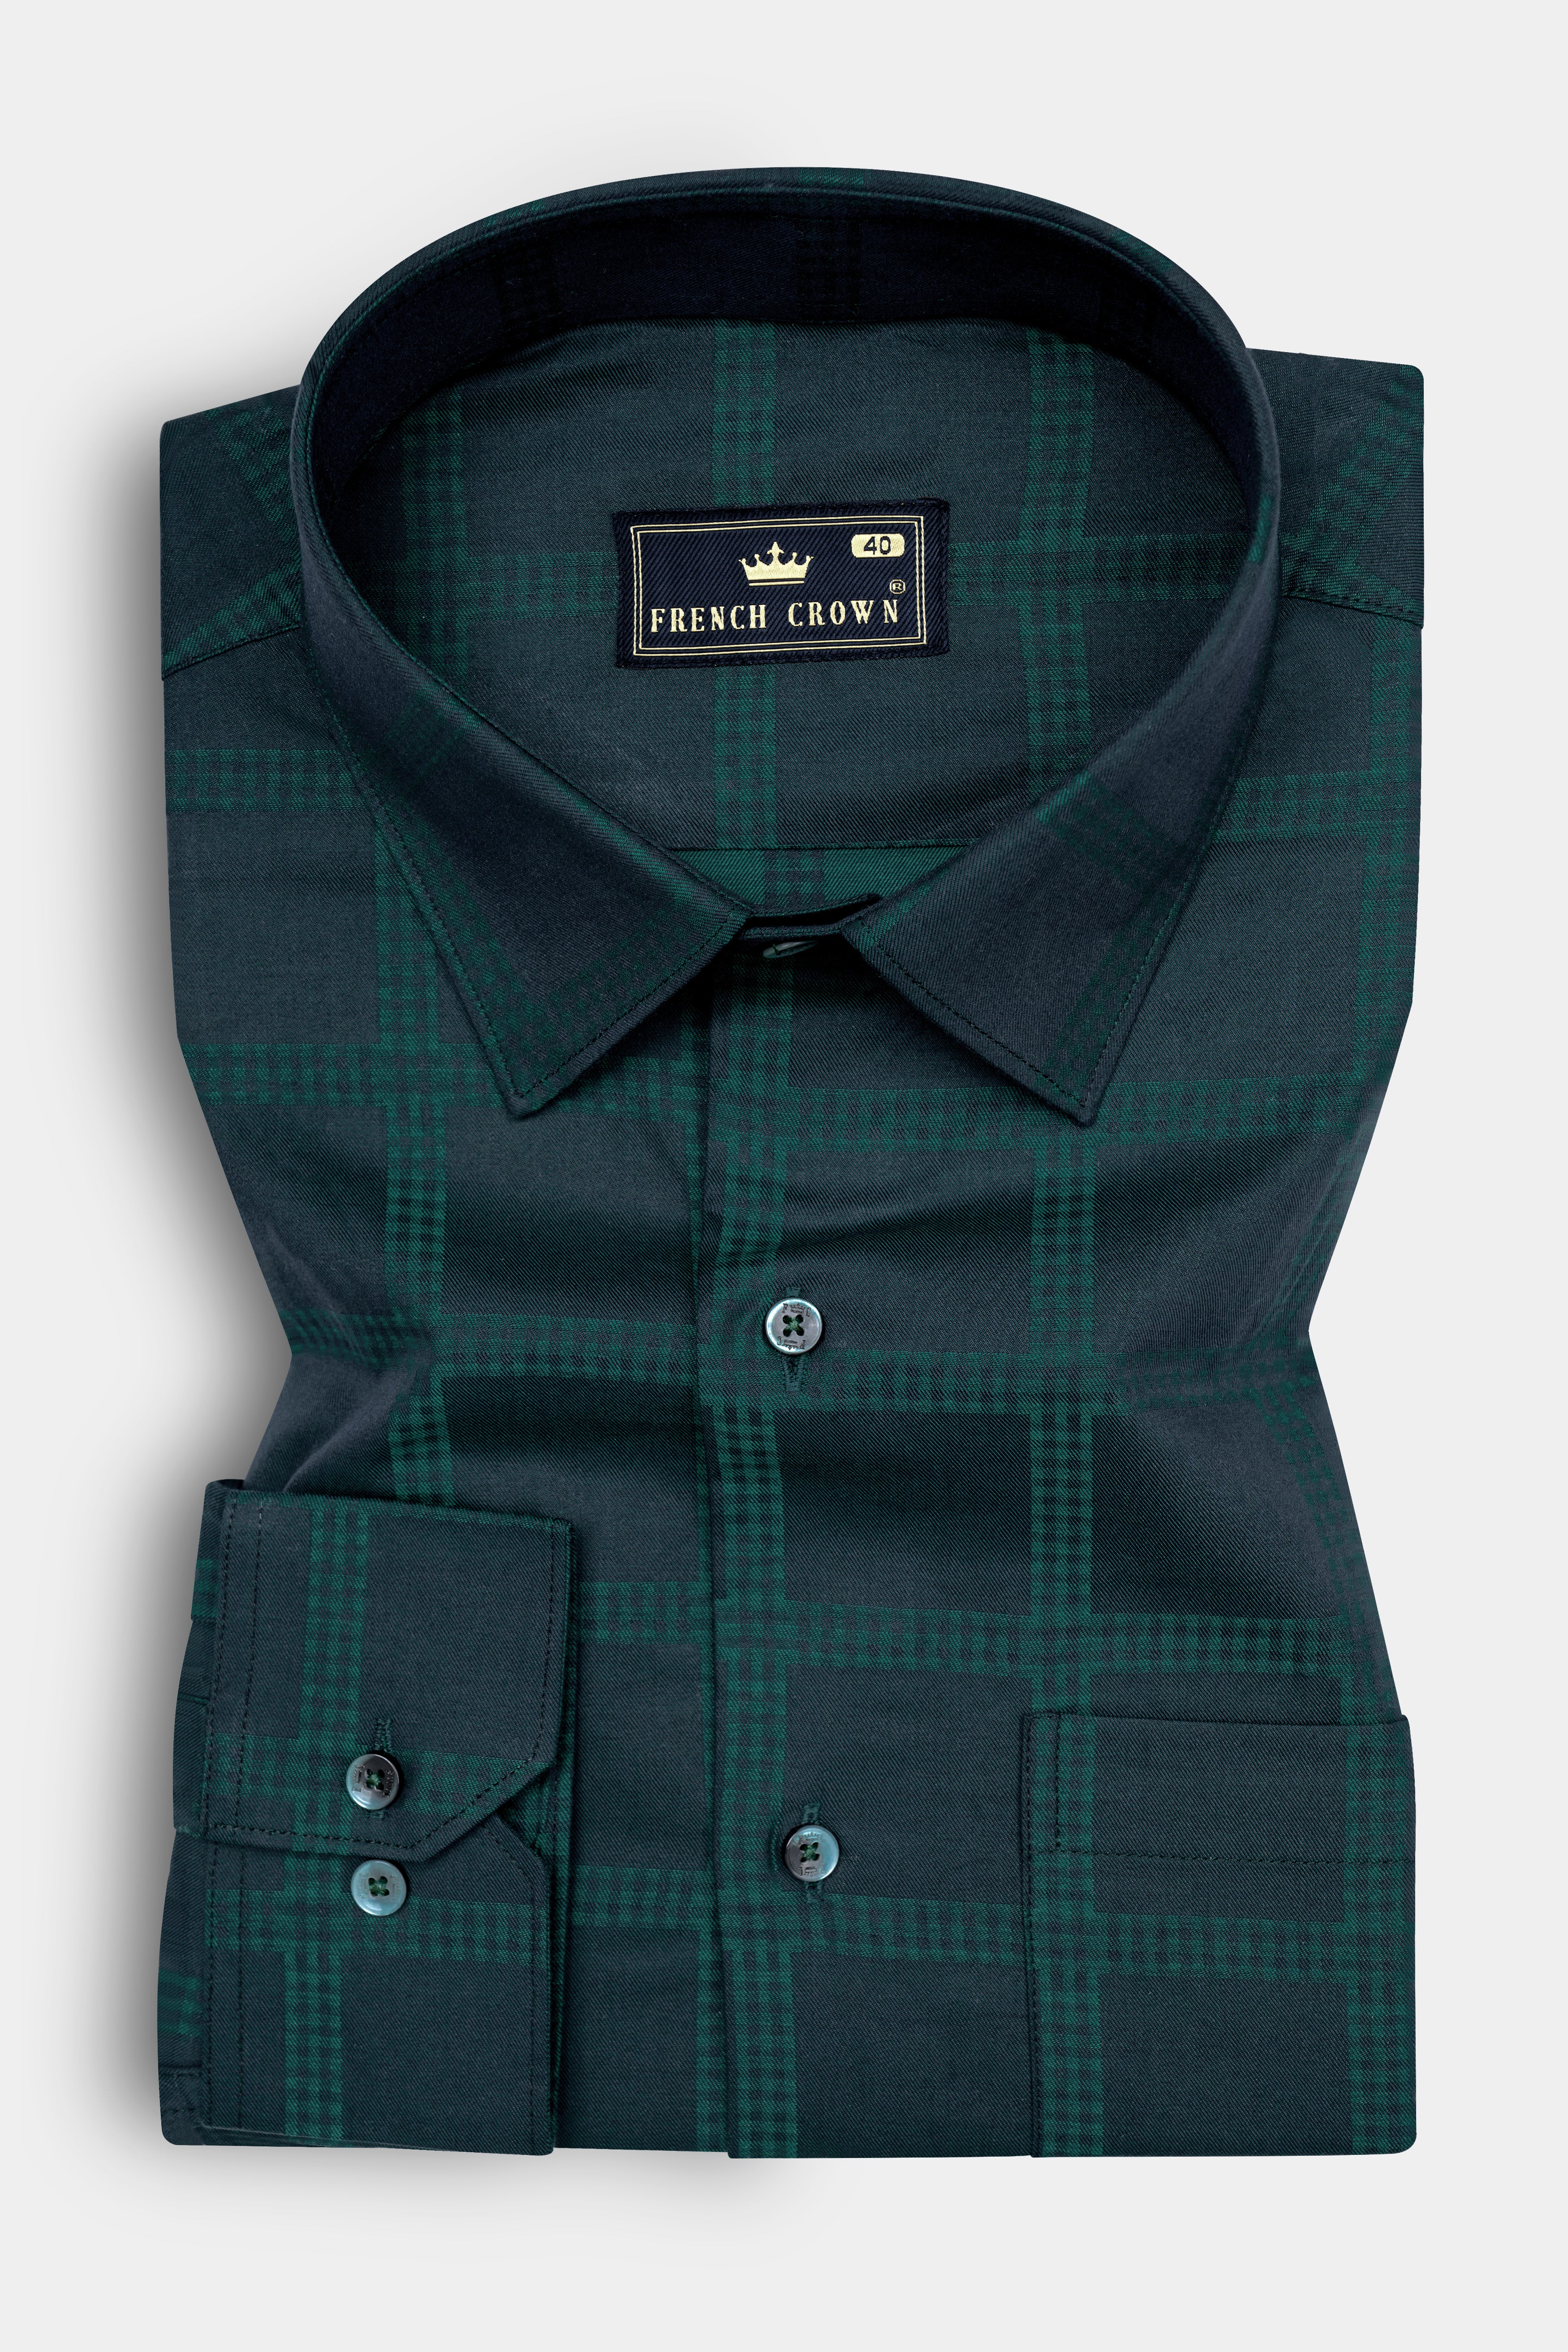 Daintree Green Windowpane Jacquard Textured Premium Giza Cotton Shirt